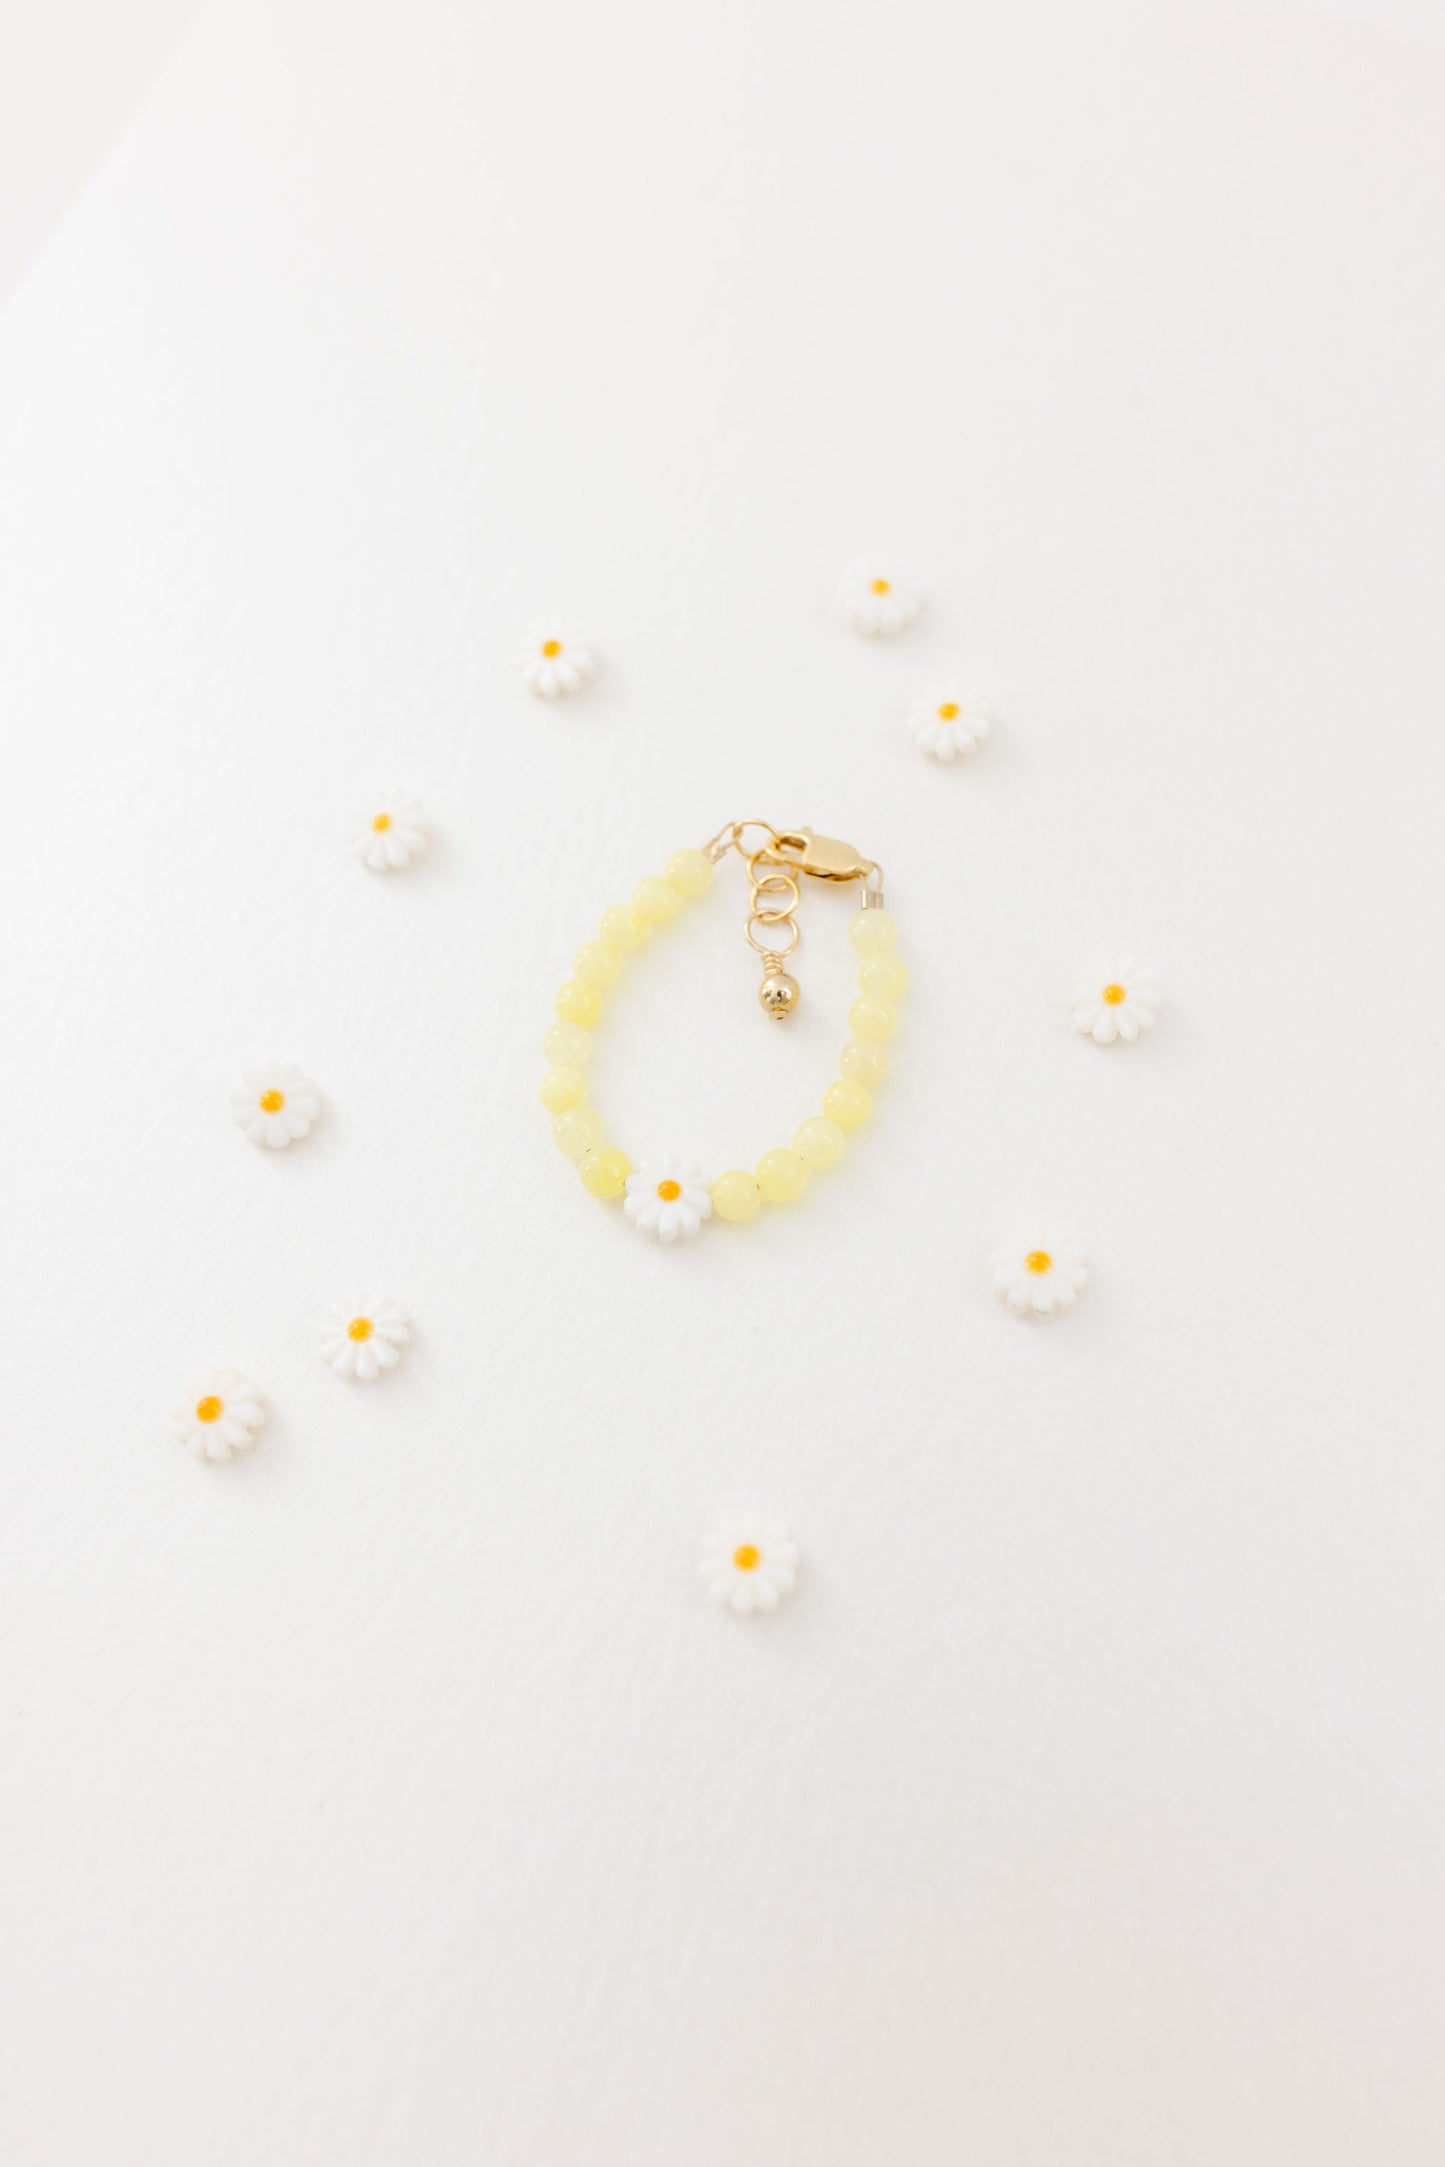 Daisy Baby Bracelet (Daffodil 4MM Beads)